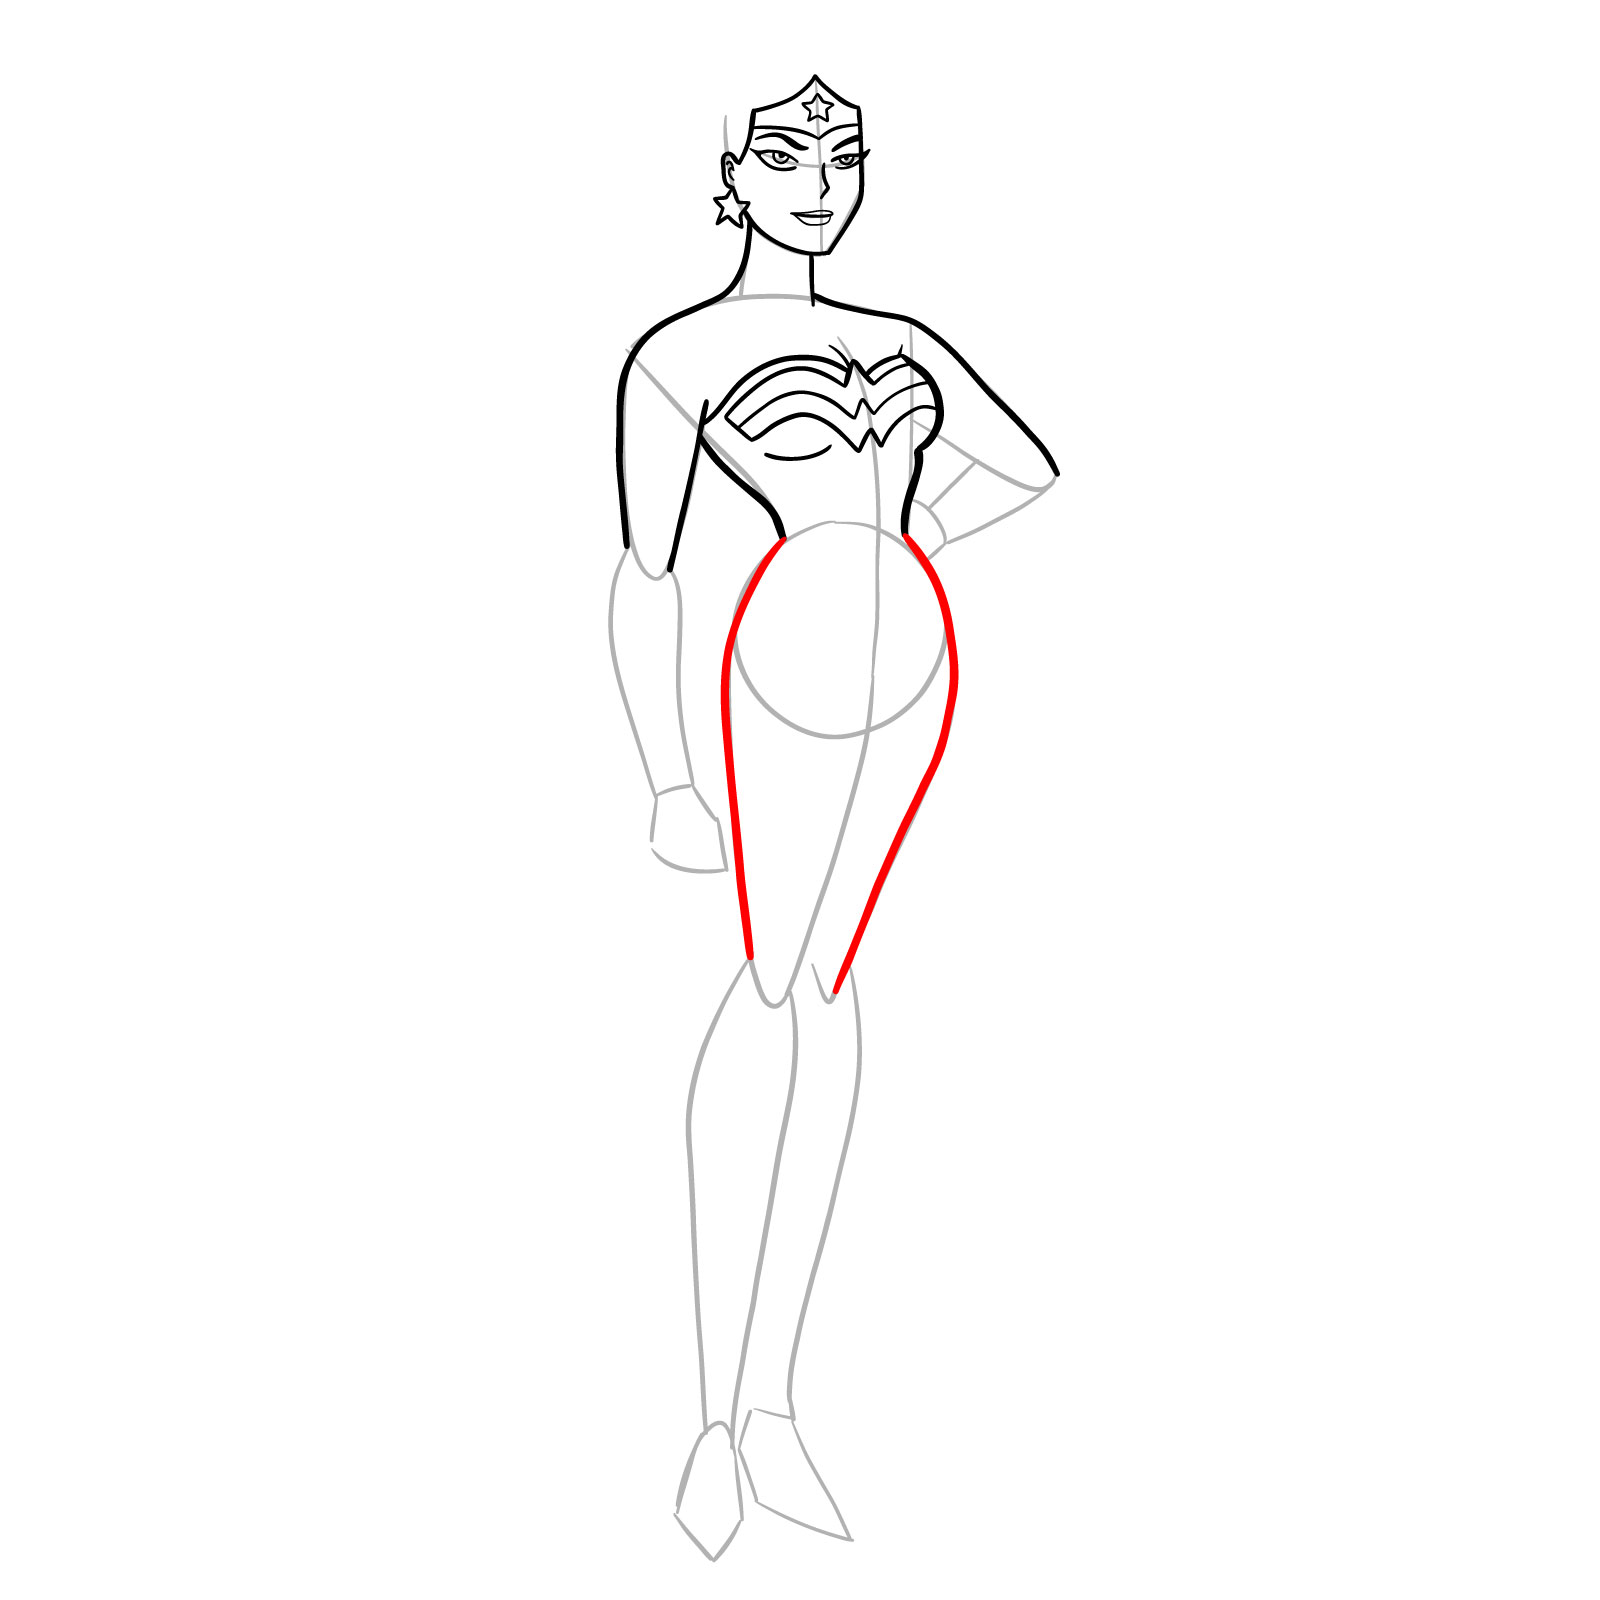 How to draw Wonder Woman cartoon style - step 16